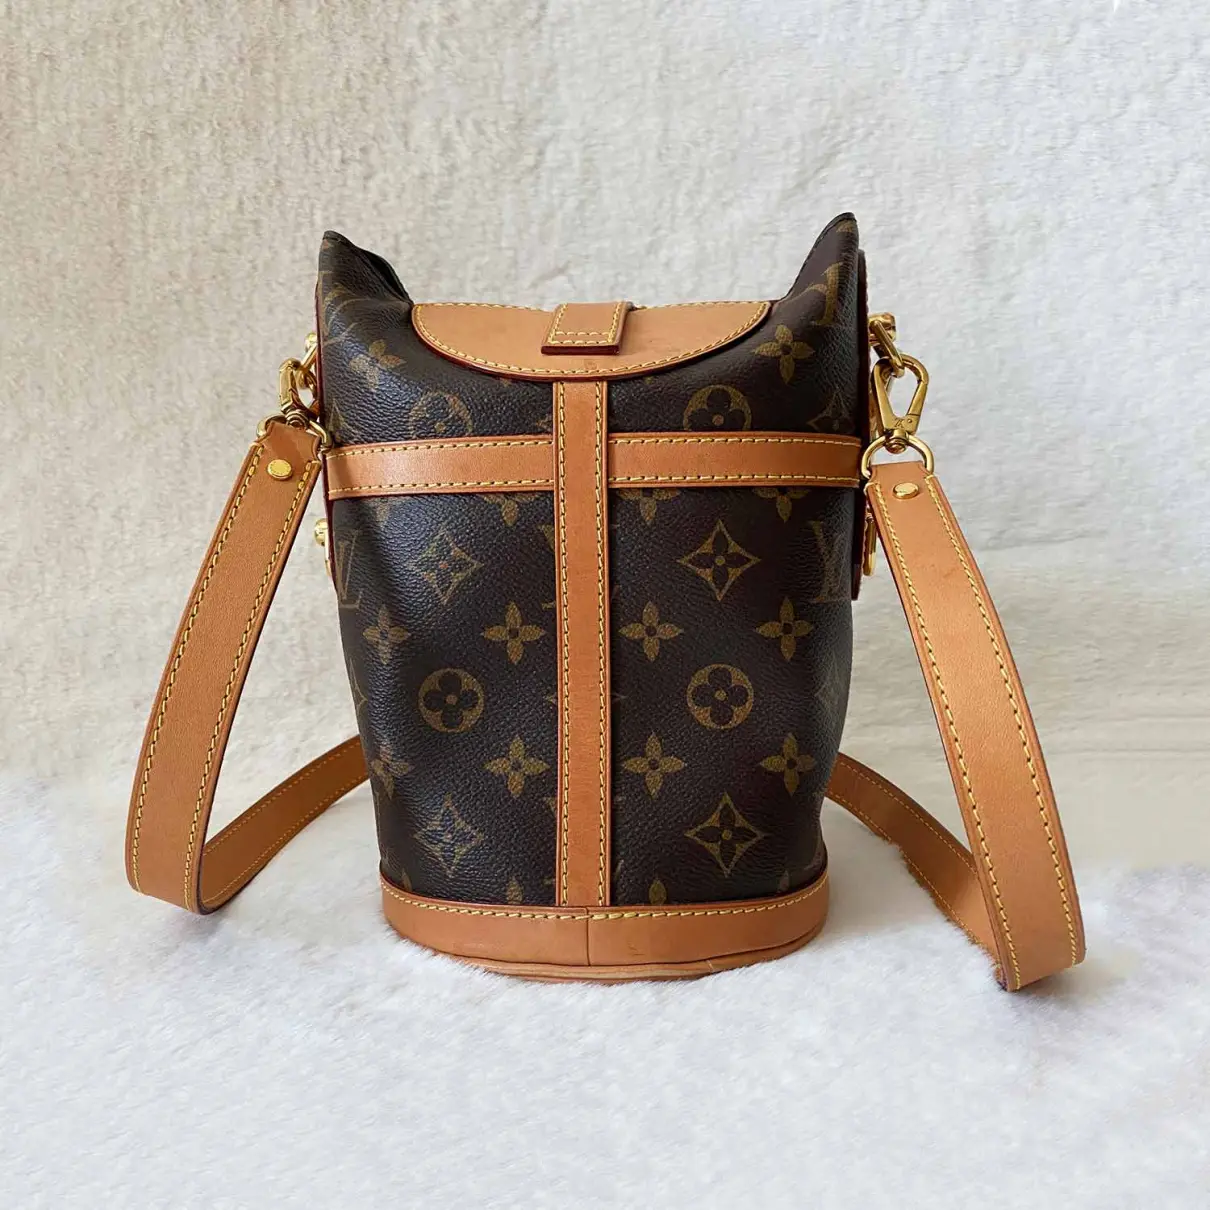 Buy Louis Vuitton Duffle cloth handbag online